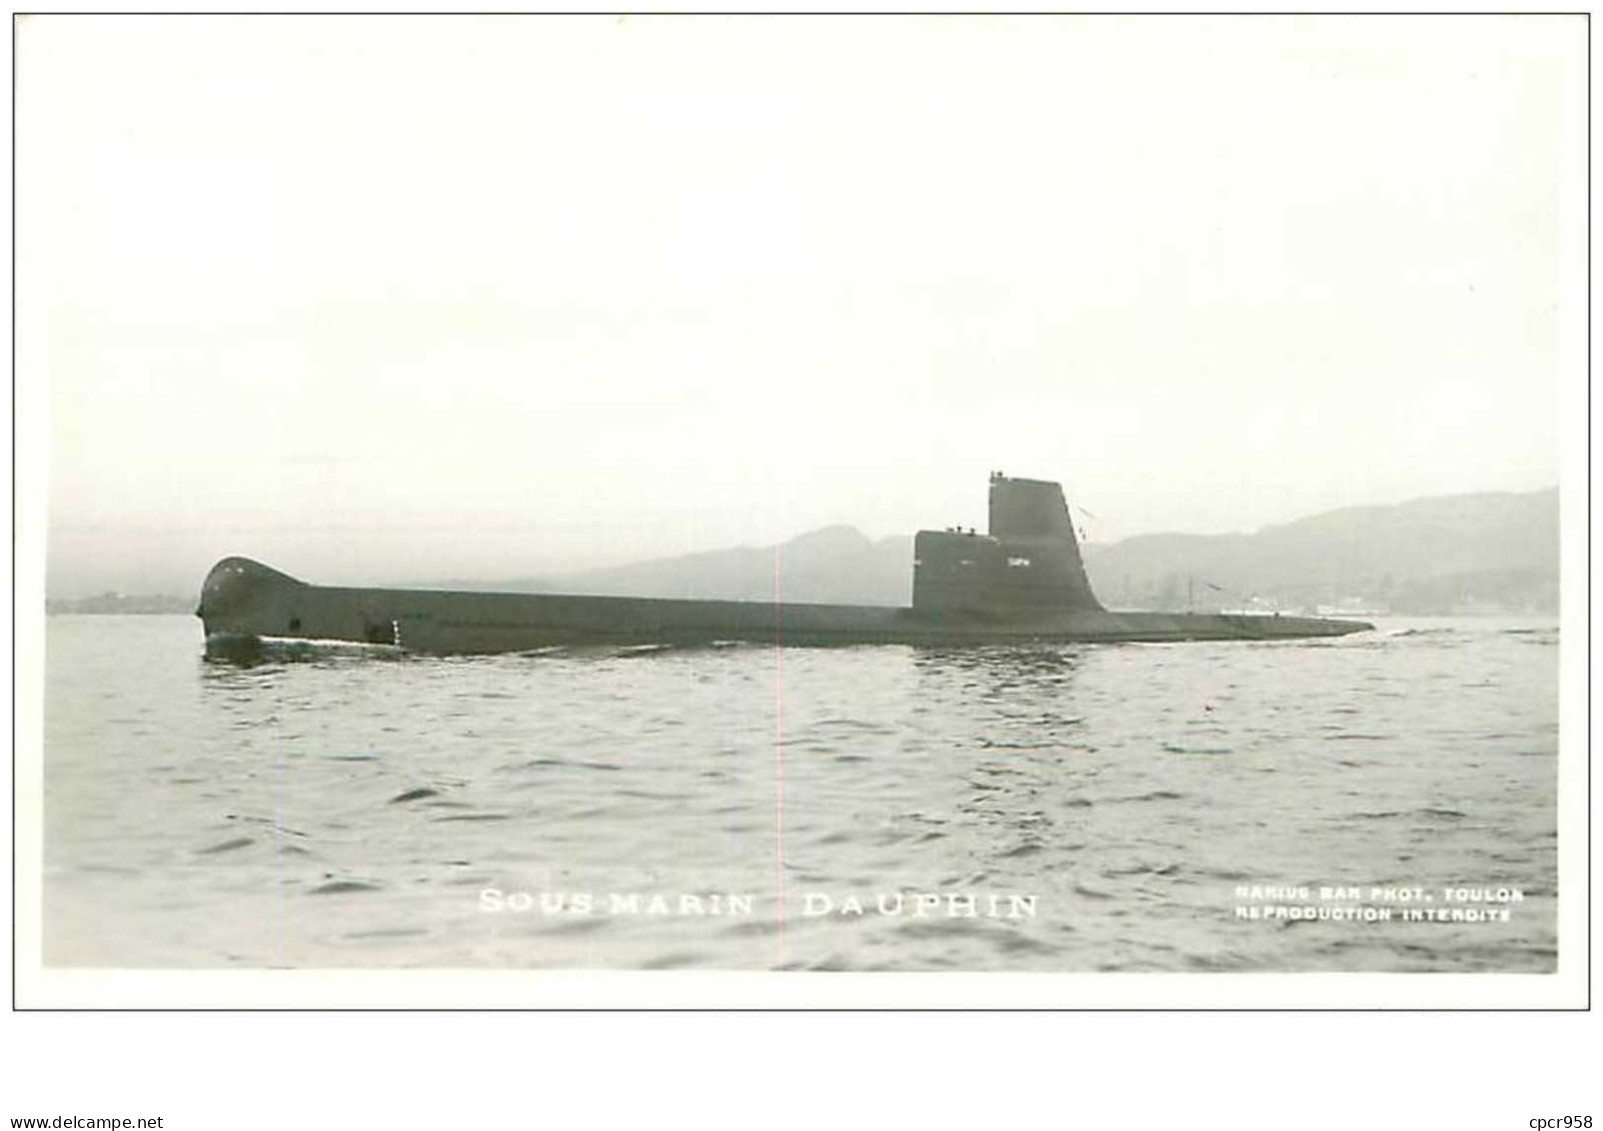 SOUS-MARINS.n°24841.PHOTO DE MARIUS BAR.DAUPHIN - Submarinos